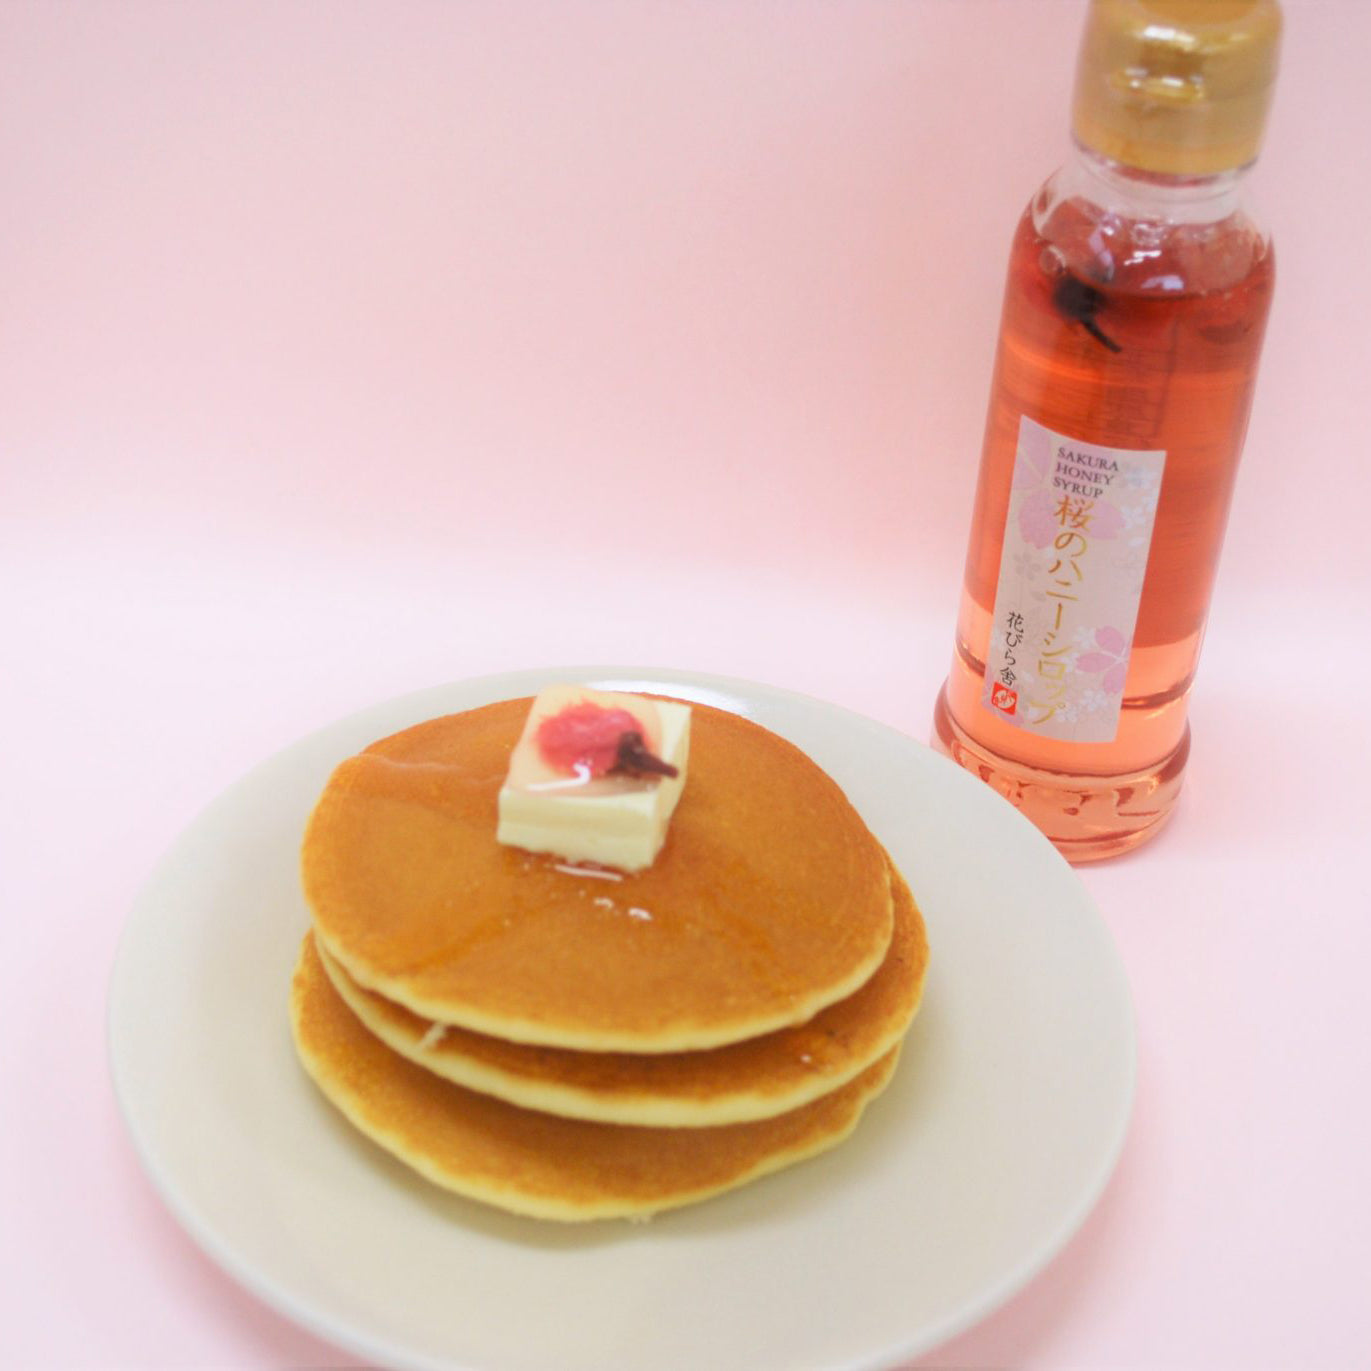 GUSTA SUPPLIES Cherry Blossom (Sakura) Honey Syrup, 145g